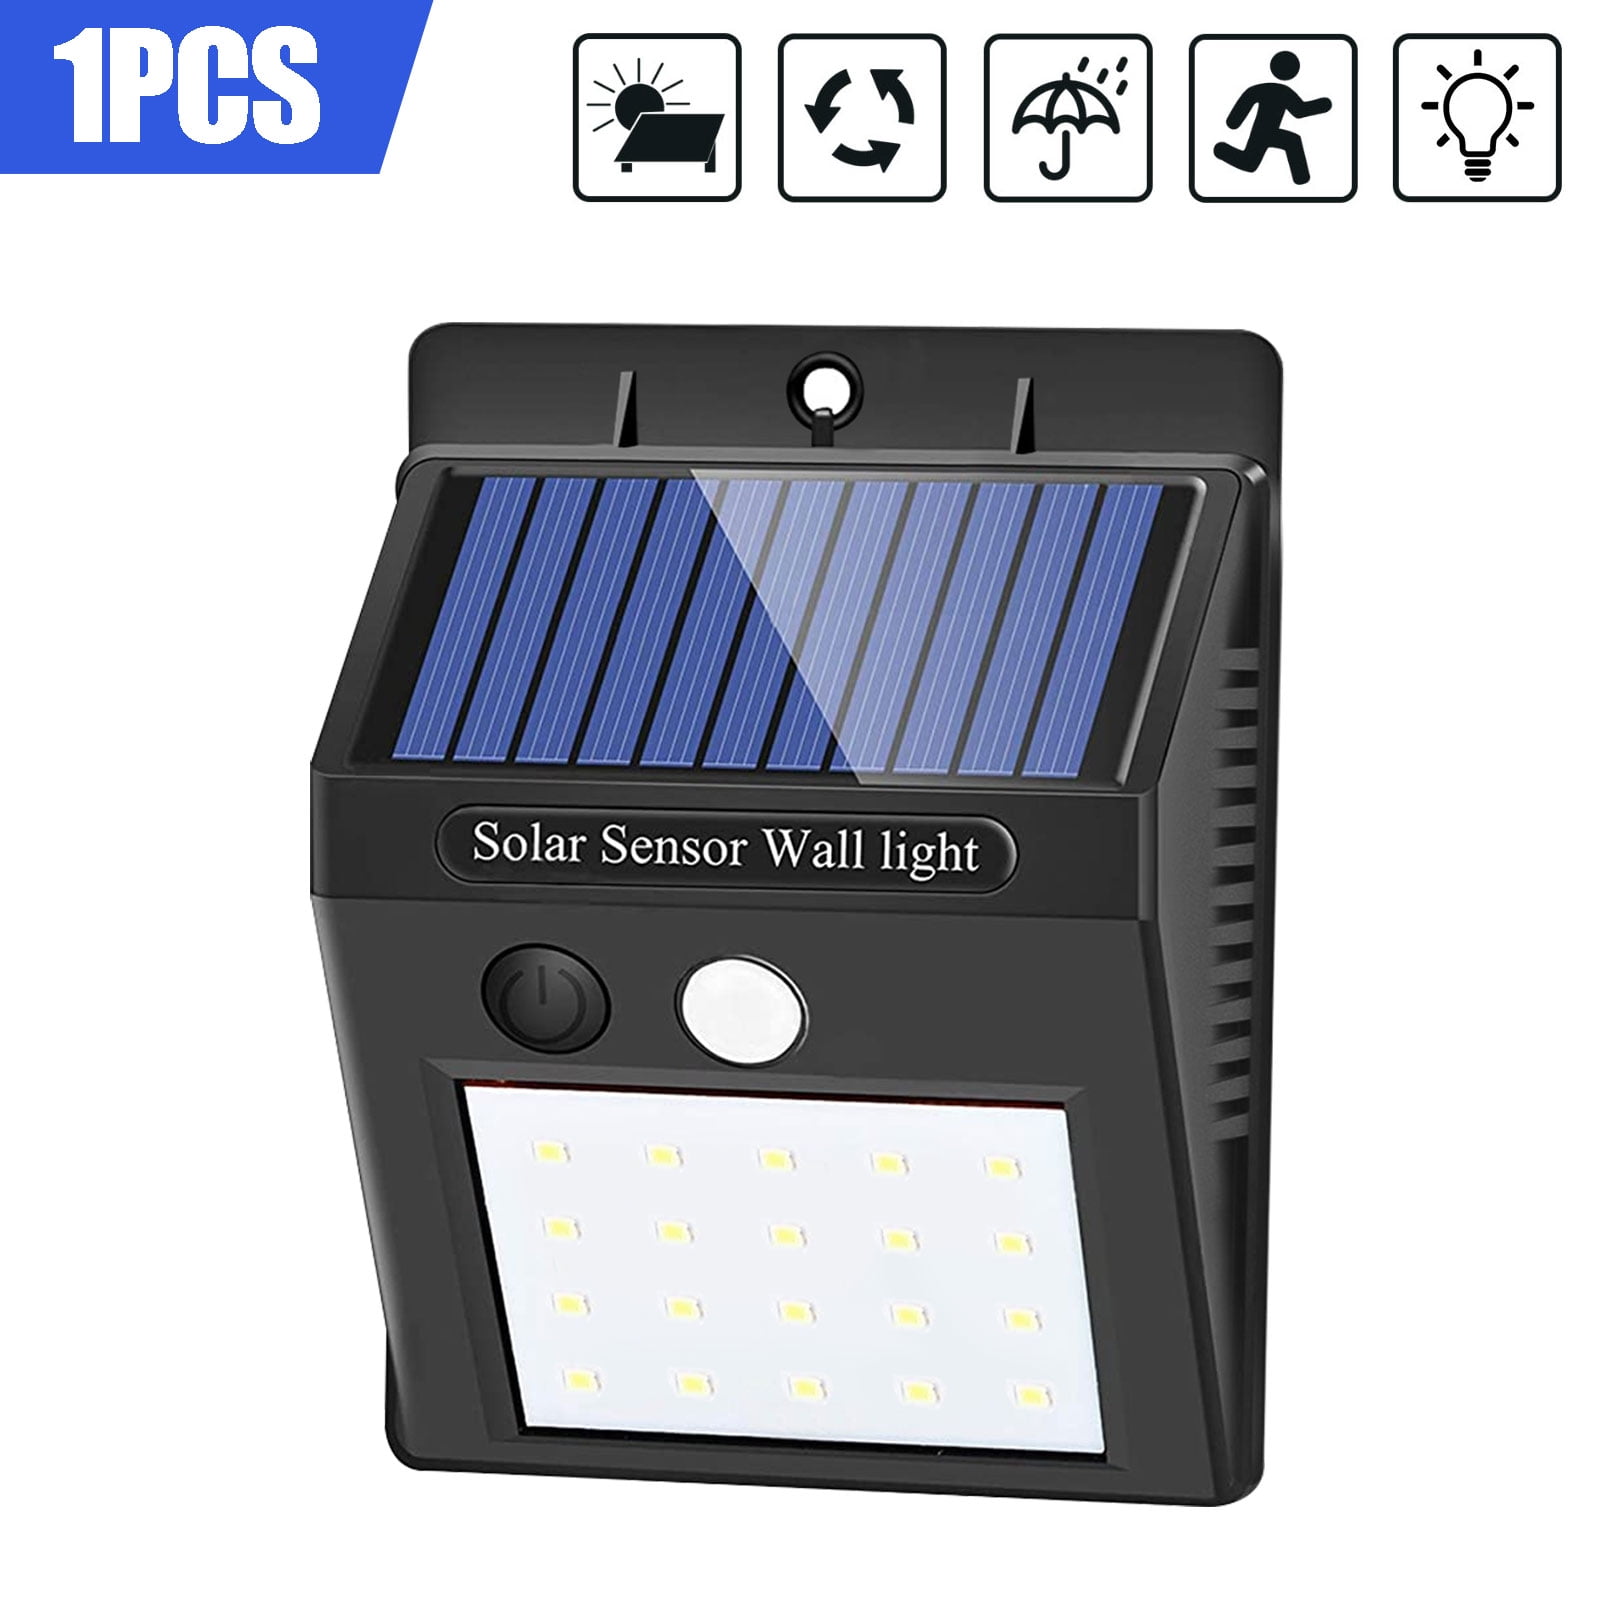 1-4PCS Solar Powered 288 LED PIR Motion Sensor Wall Light Garden Outdoor Lamps 